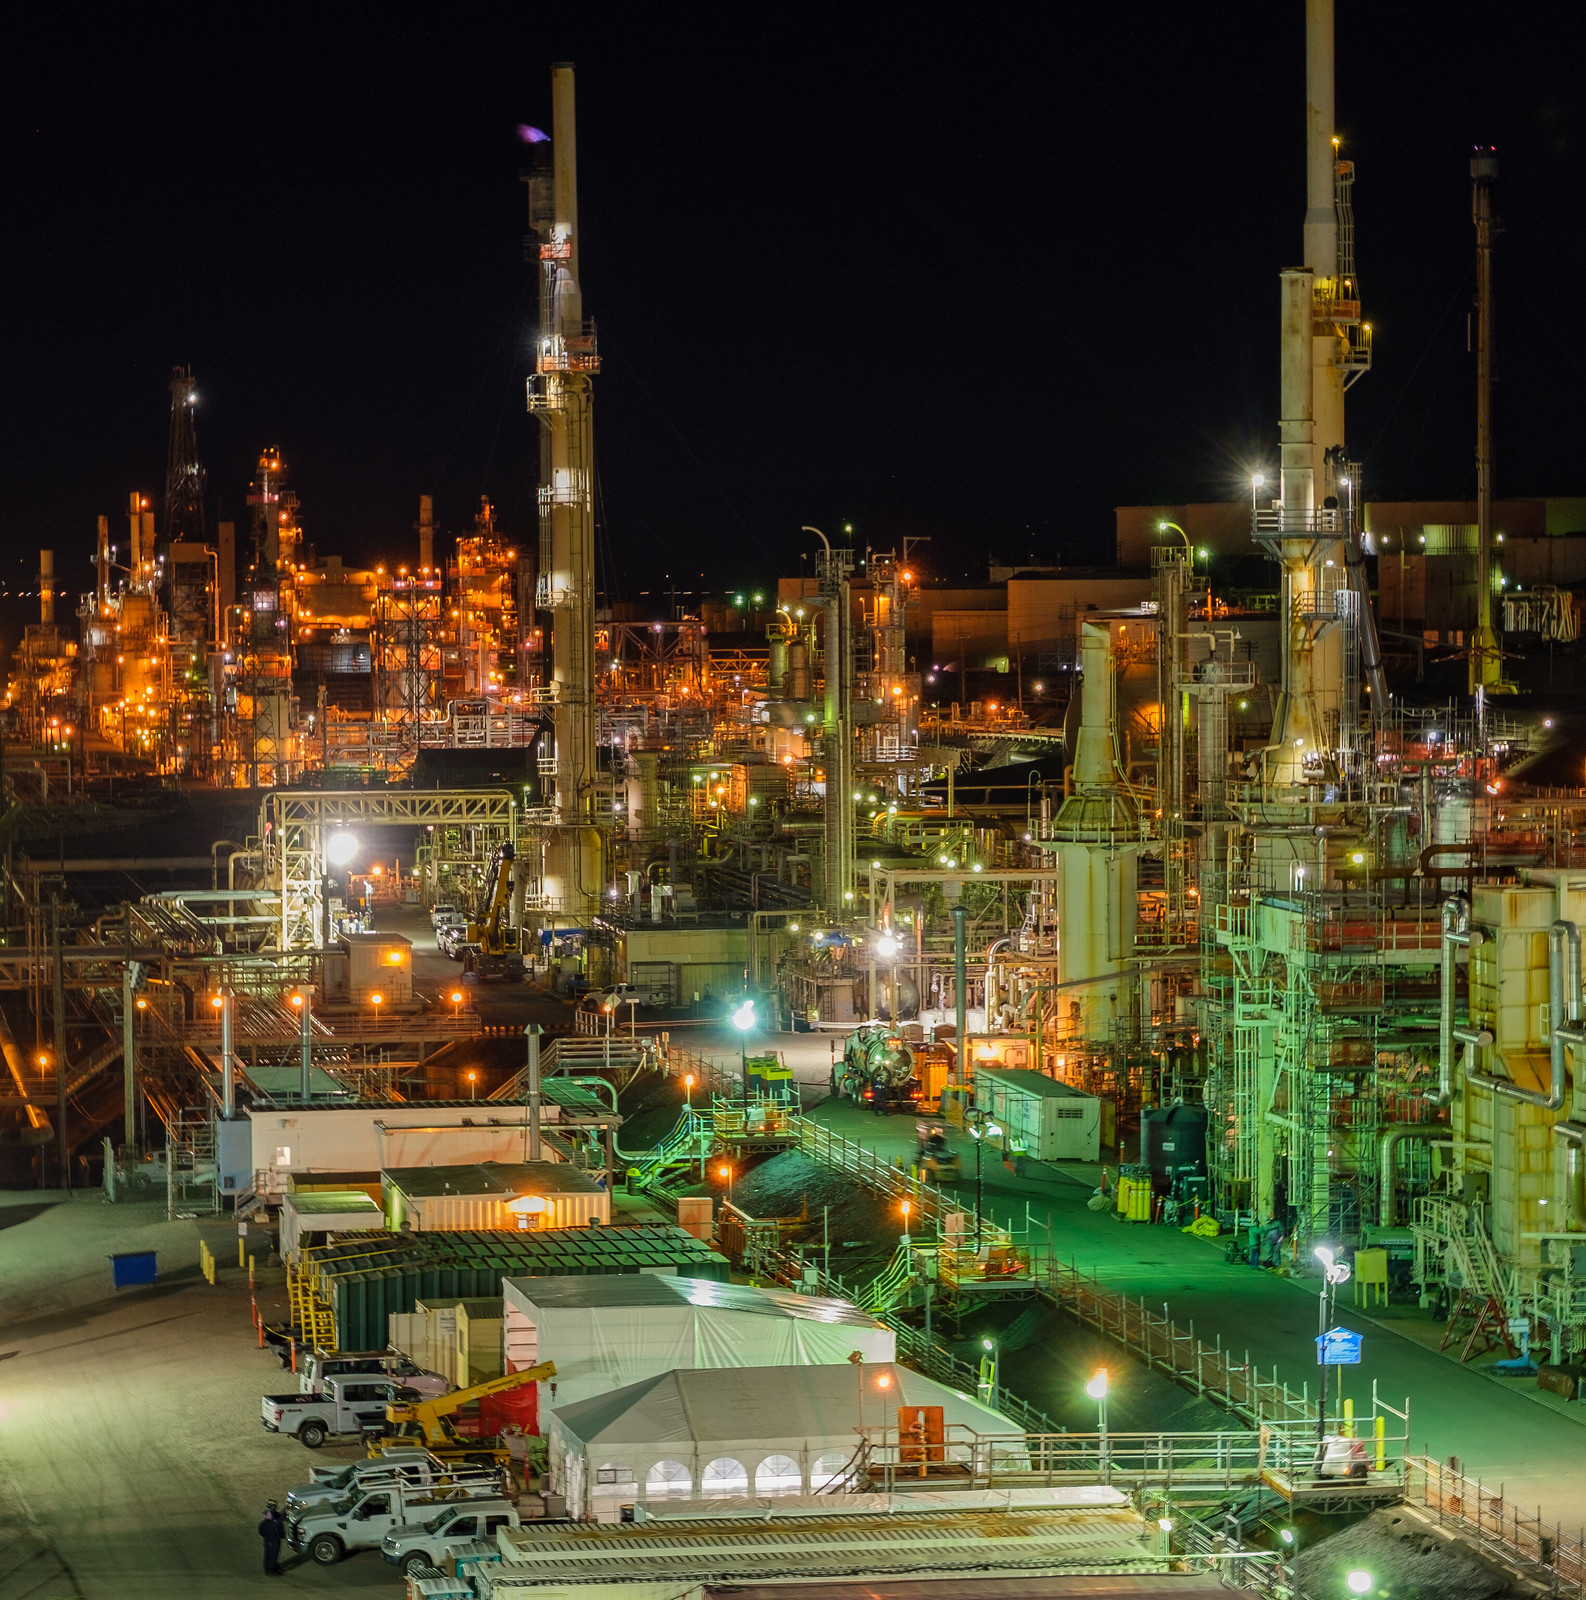 Oil refinery night glow